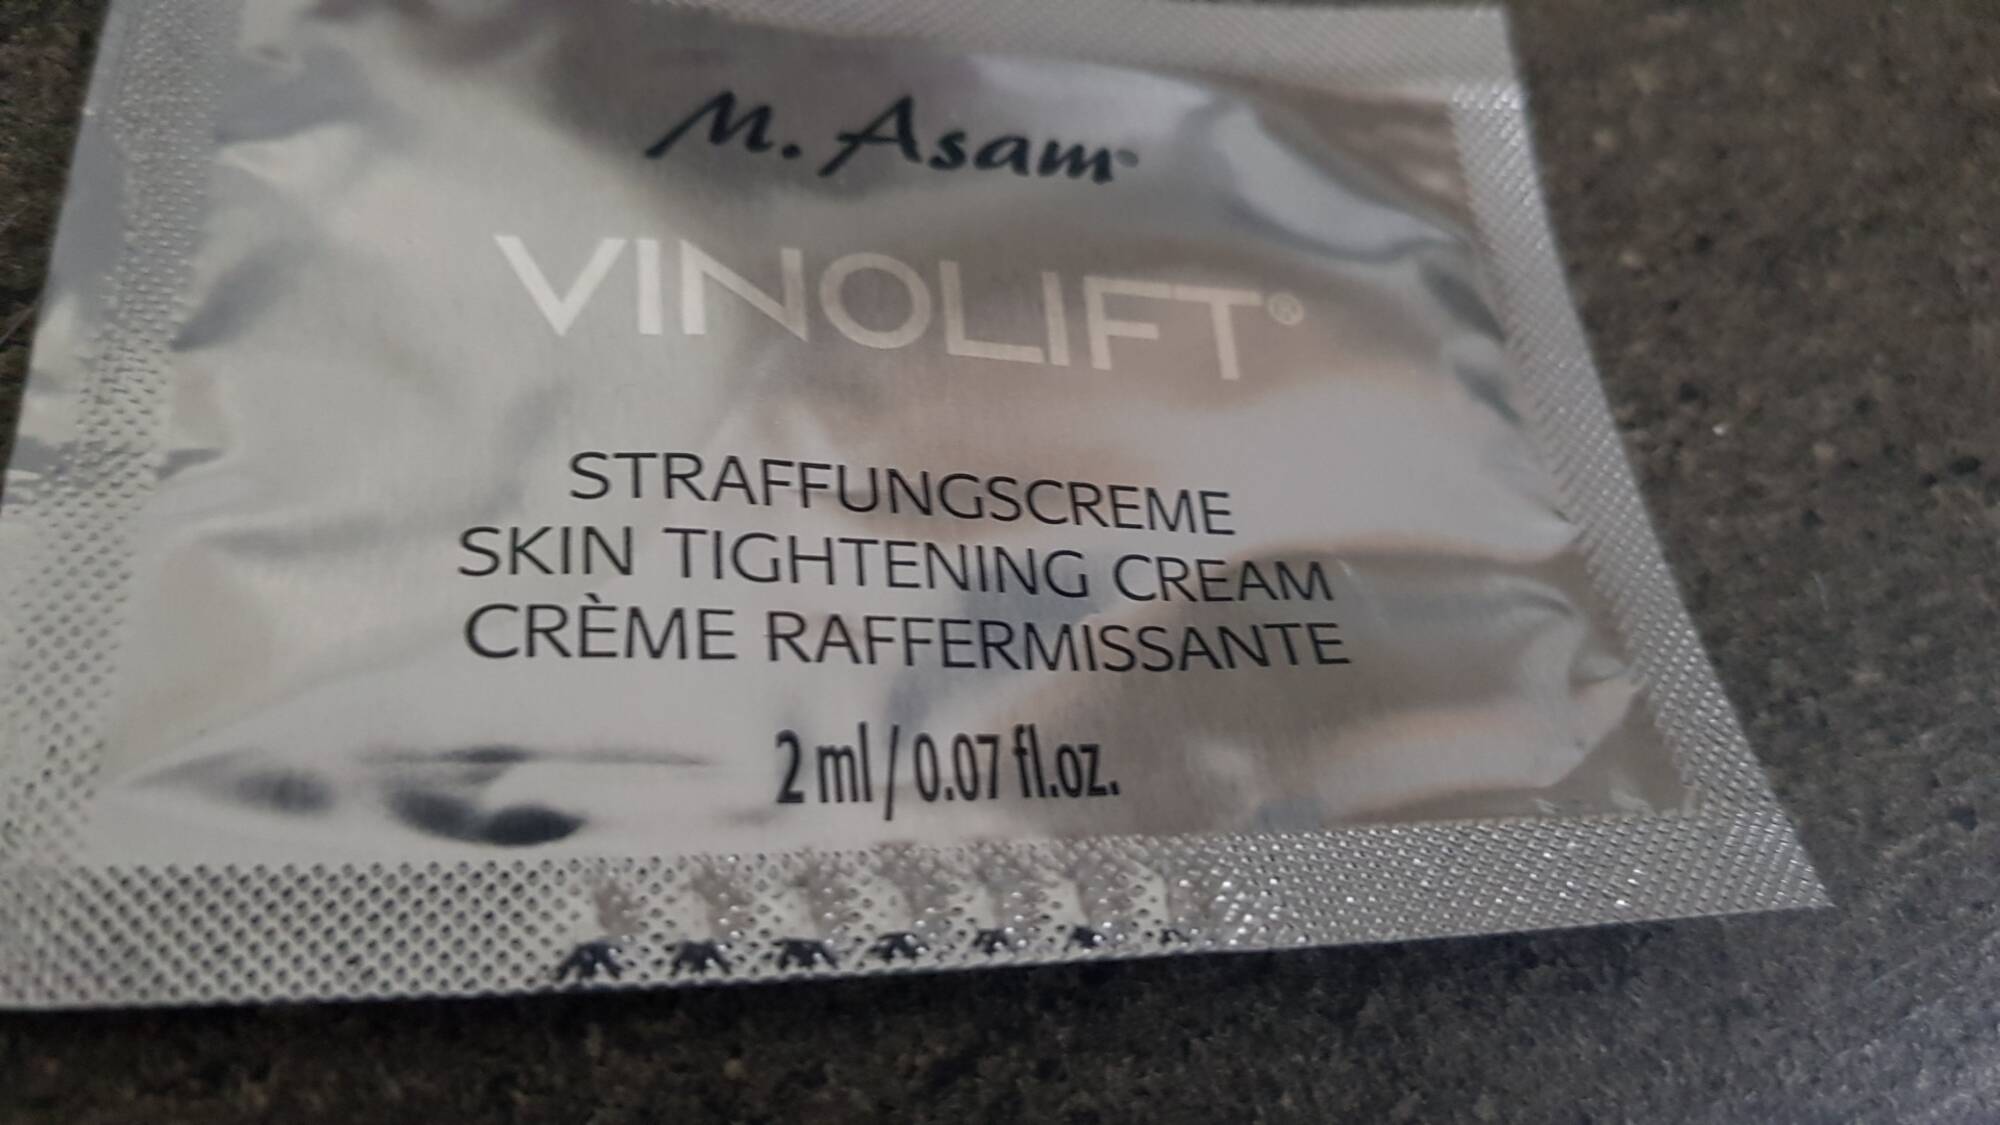 M. ASAM - Vinolift - Crème raffermissante